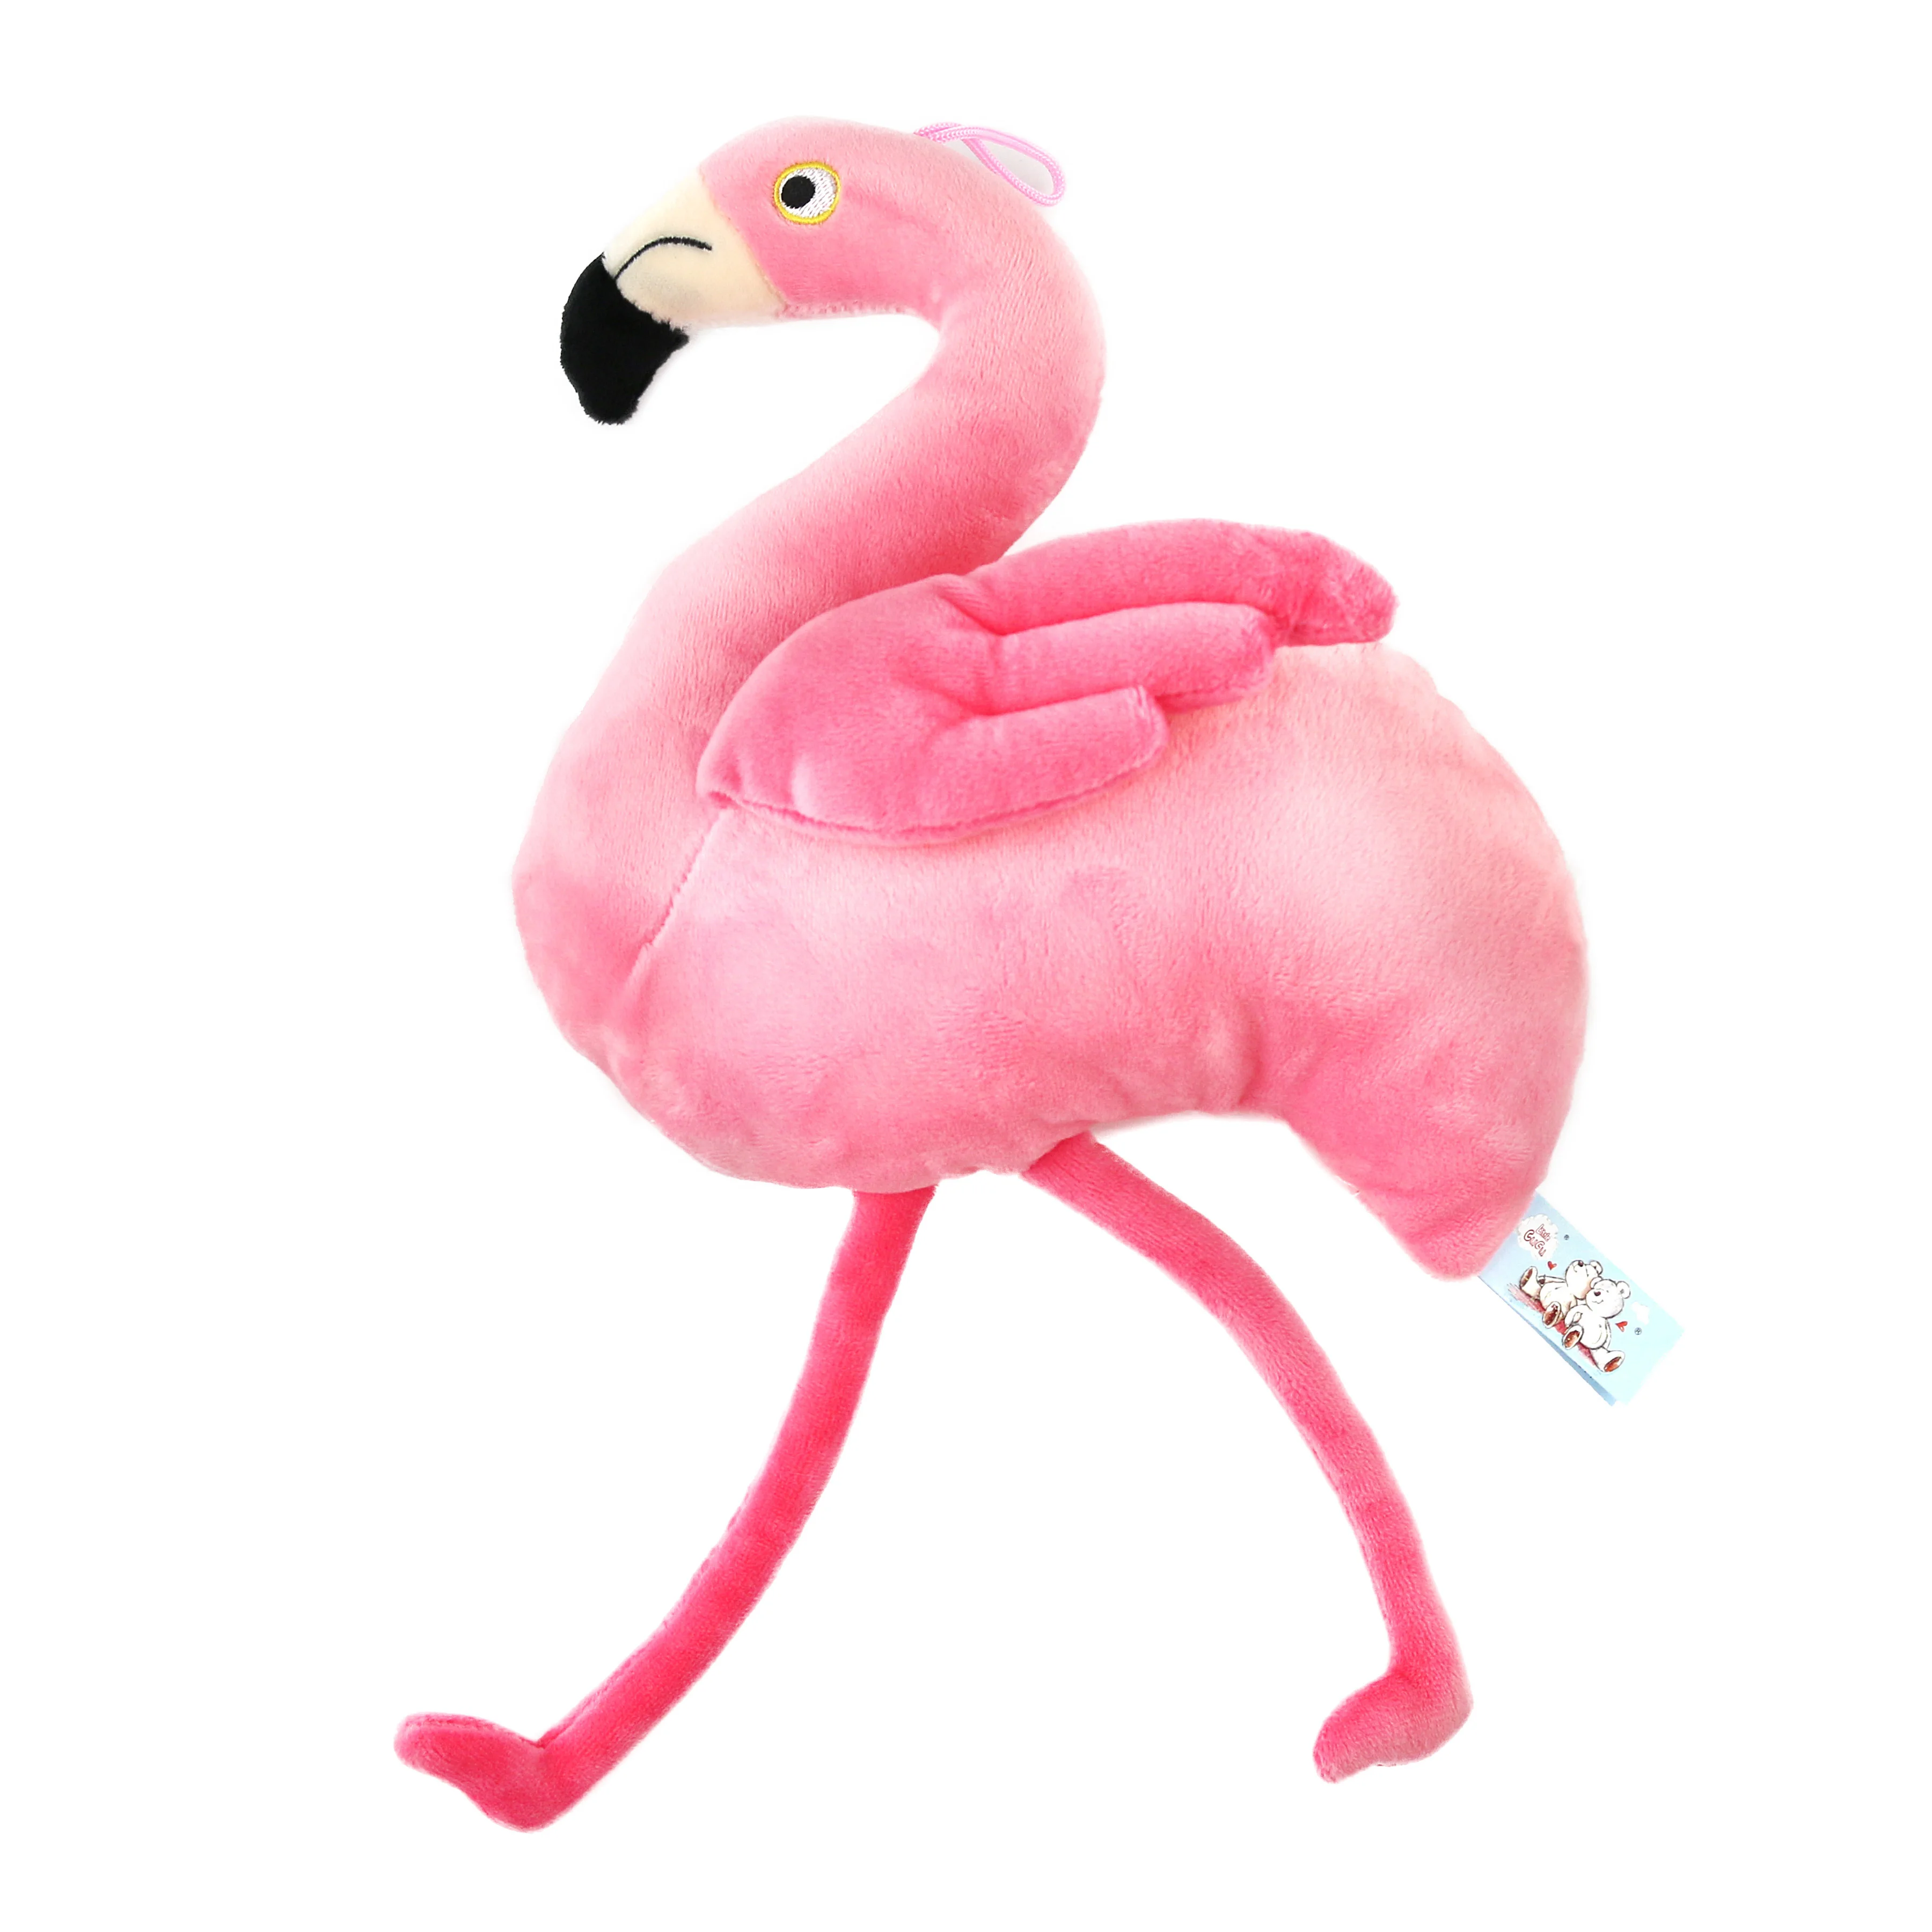 flamingo plush